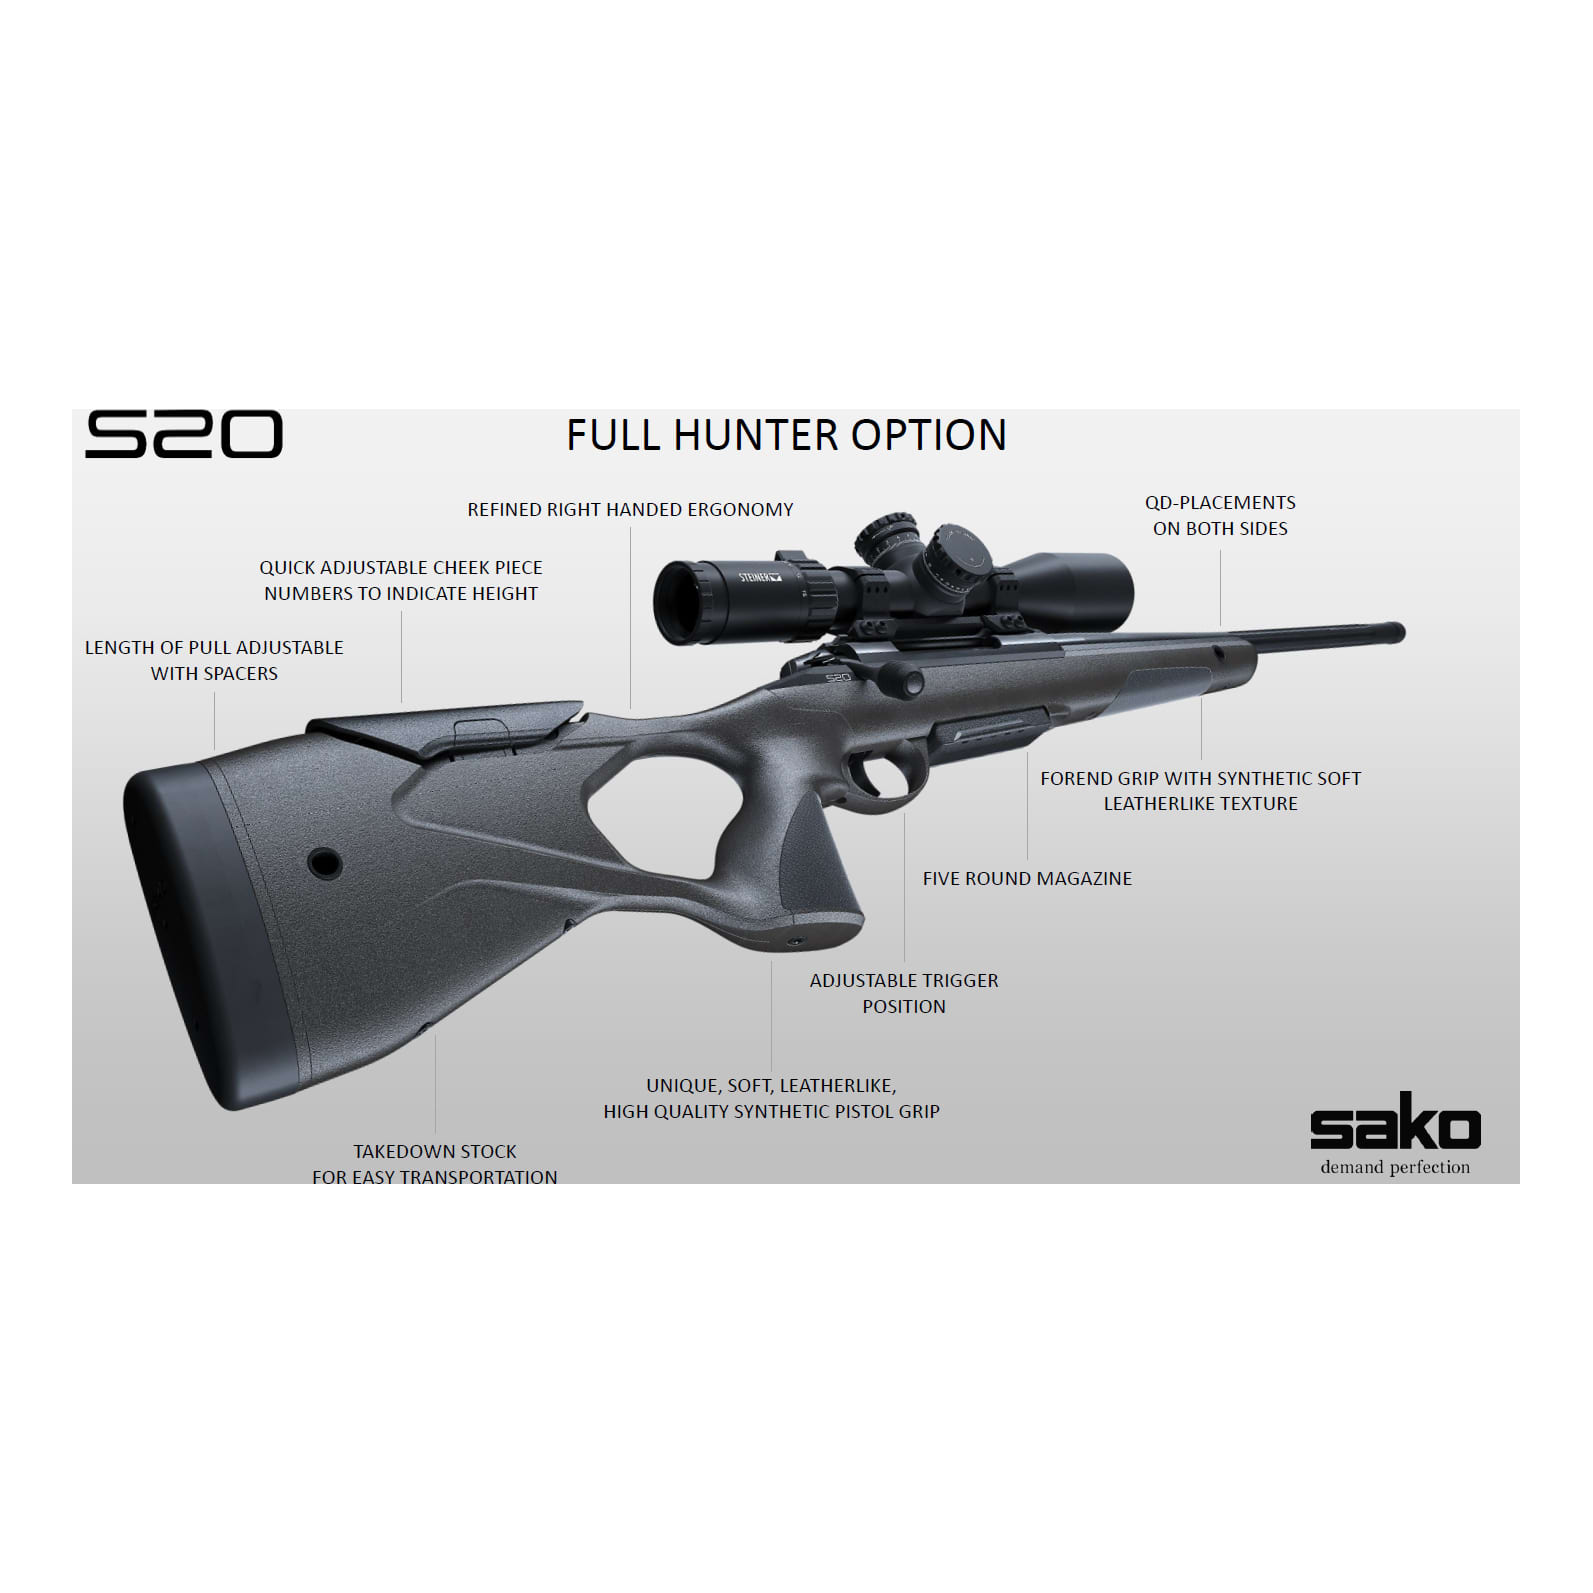 Sako S20 Hunter Bolt Action Rifle - Details View